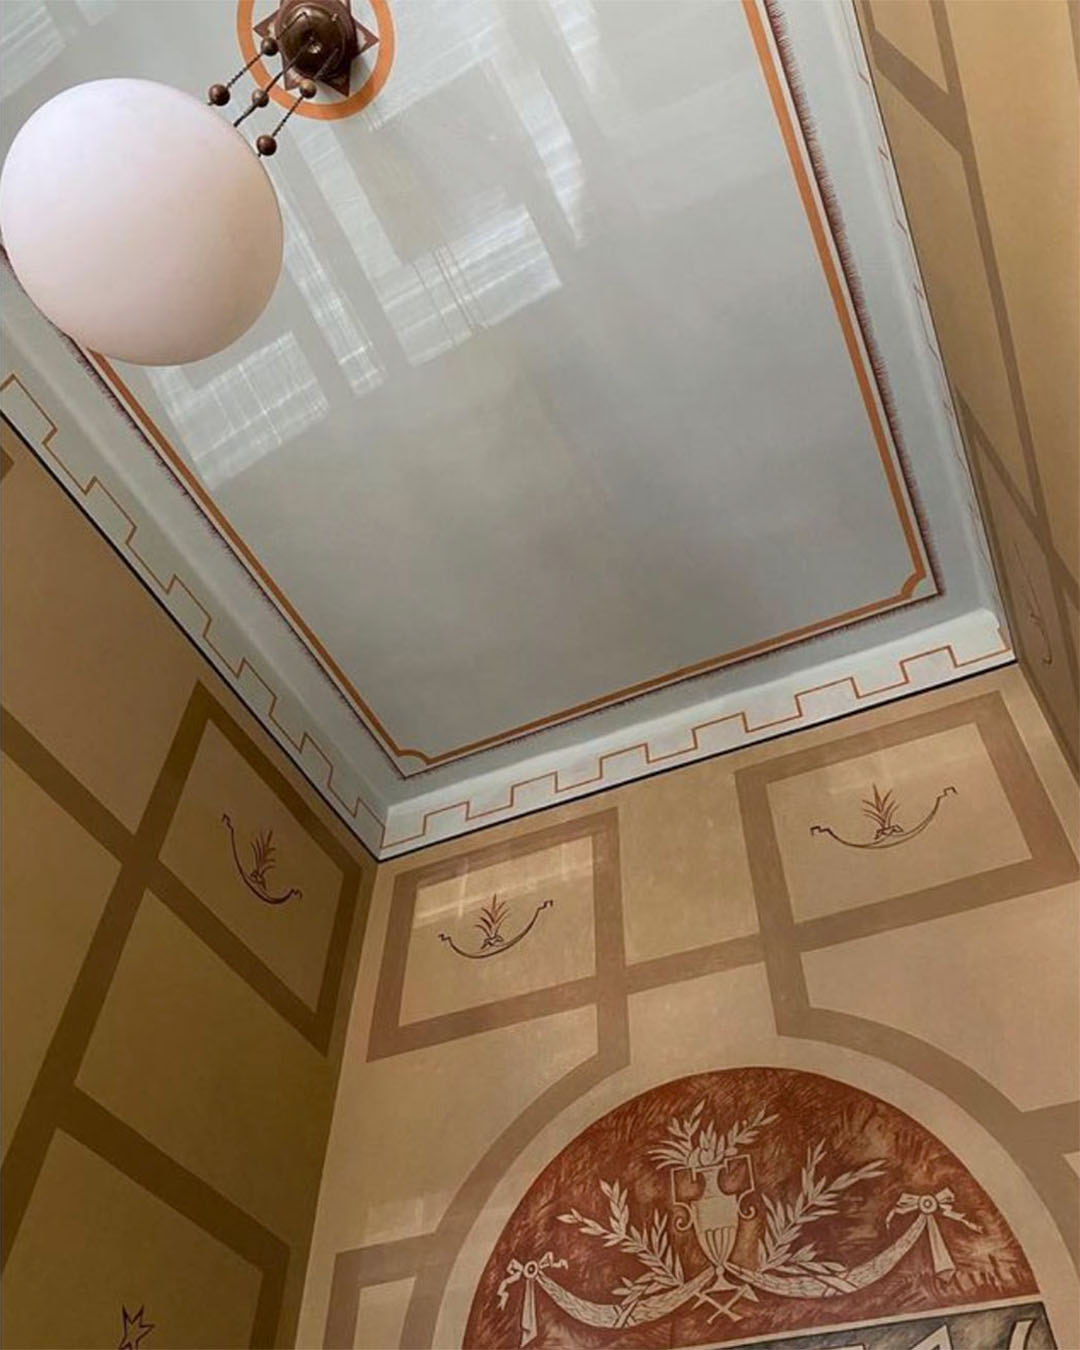 Historical ceiling artwork